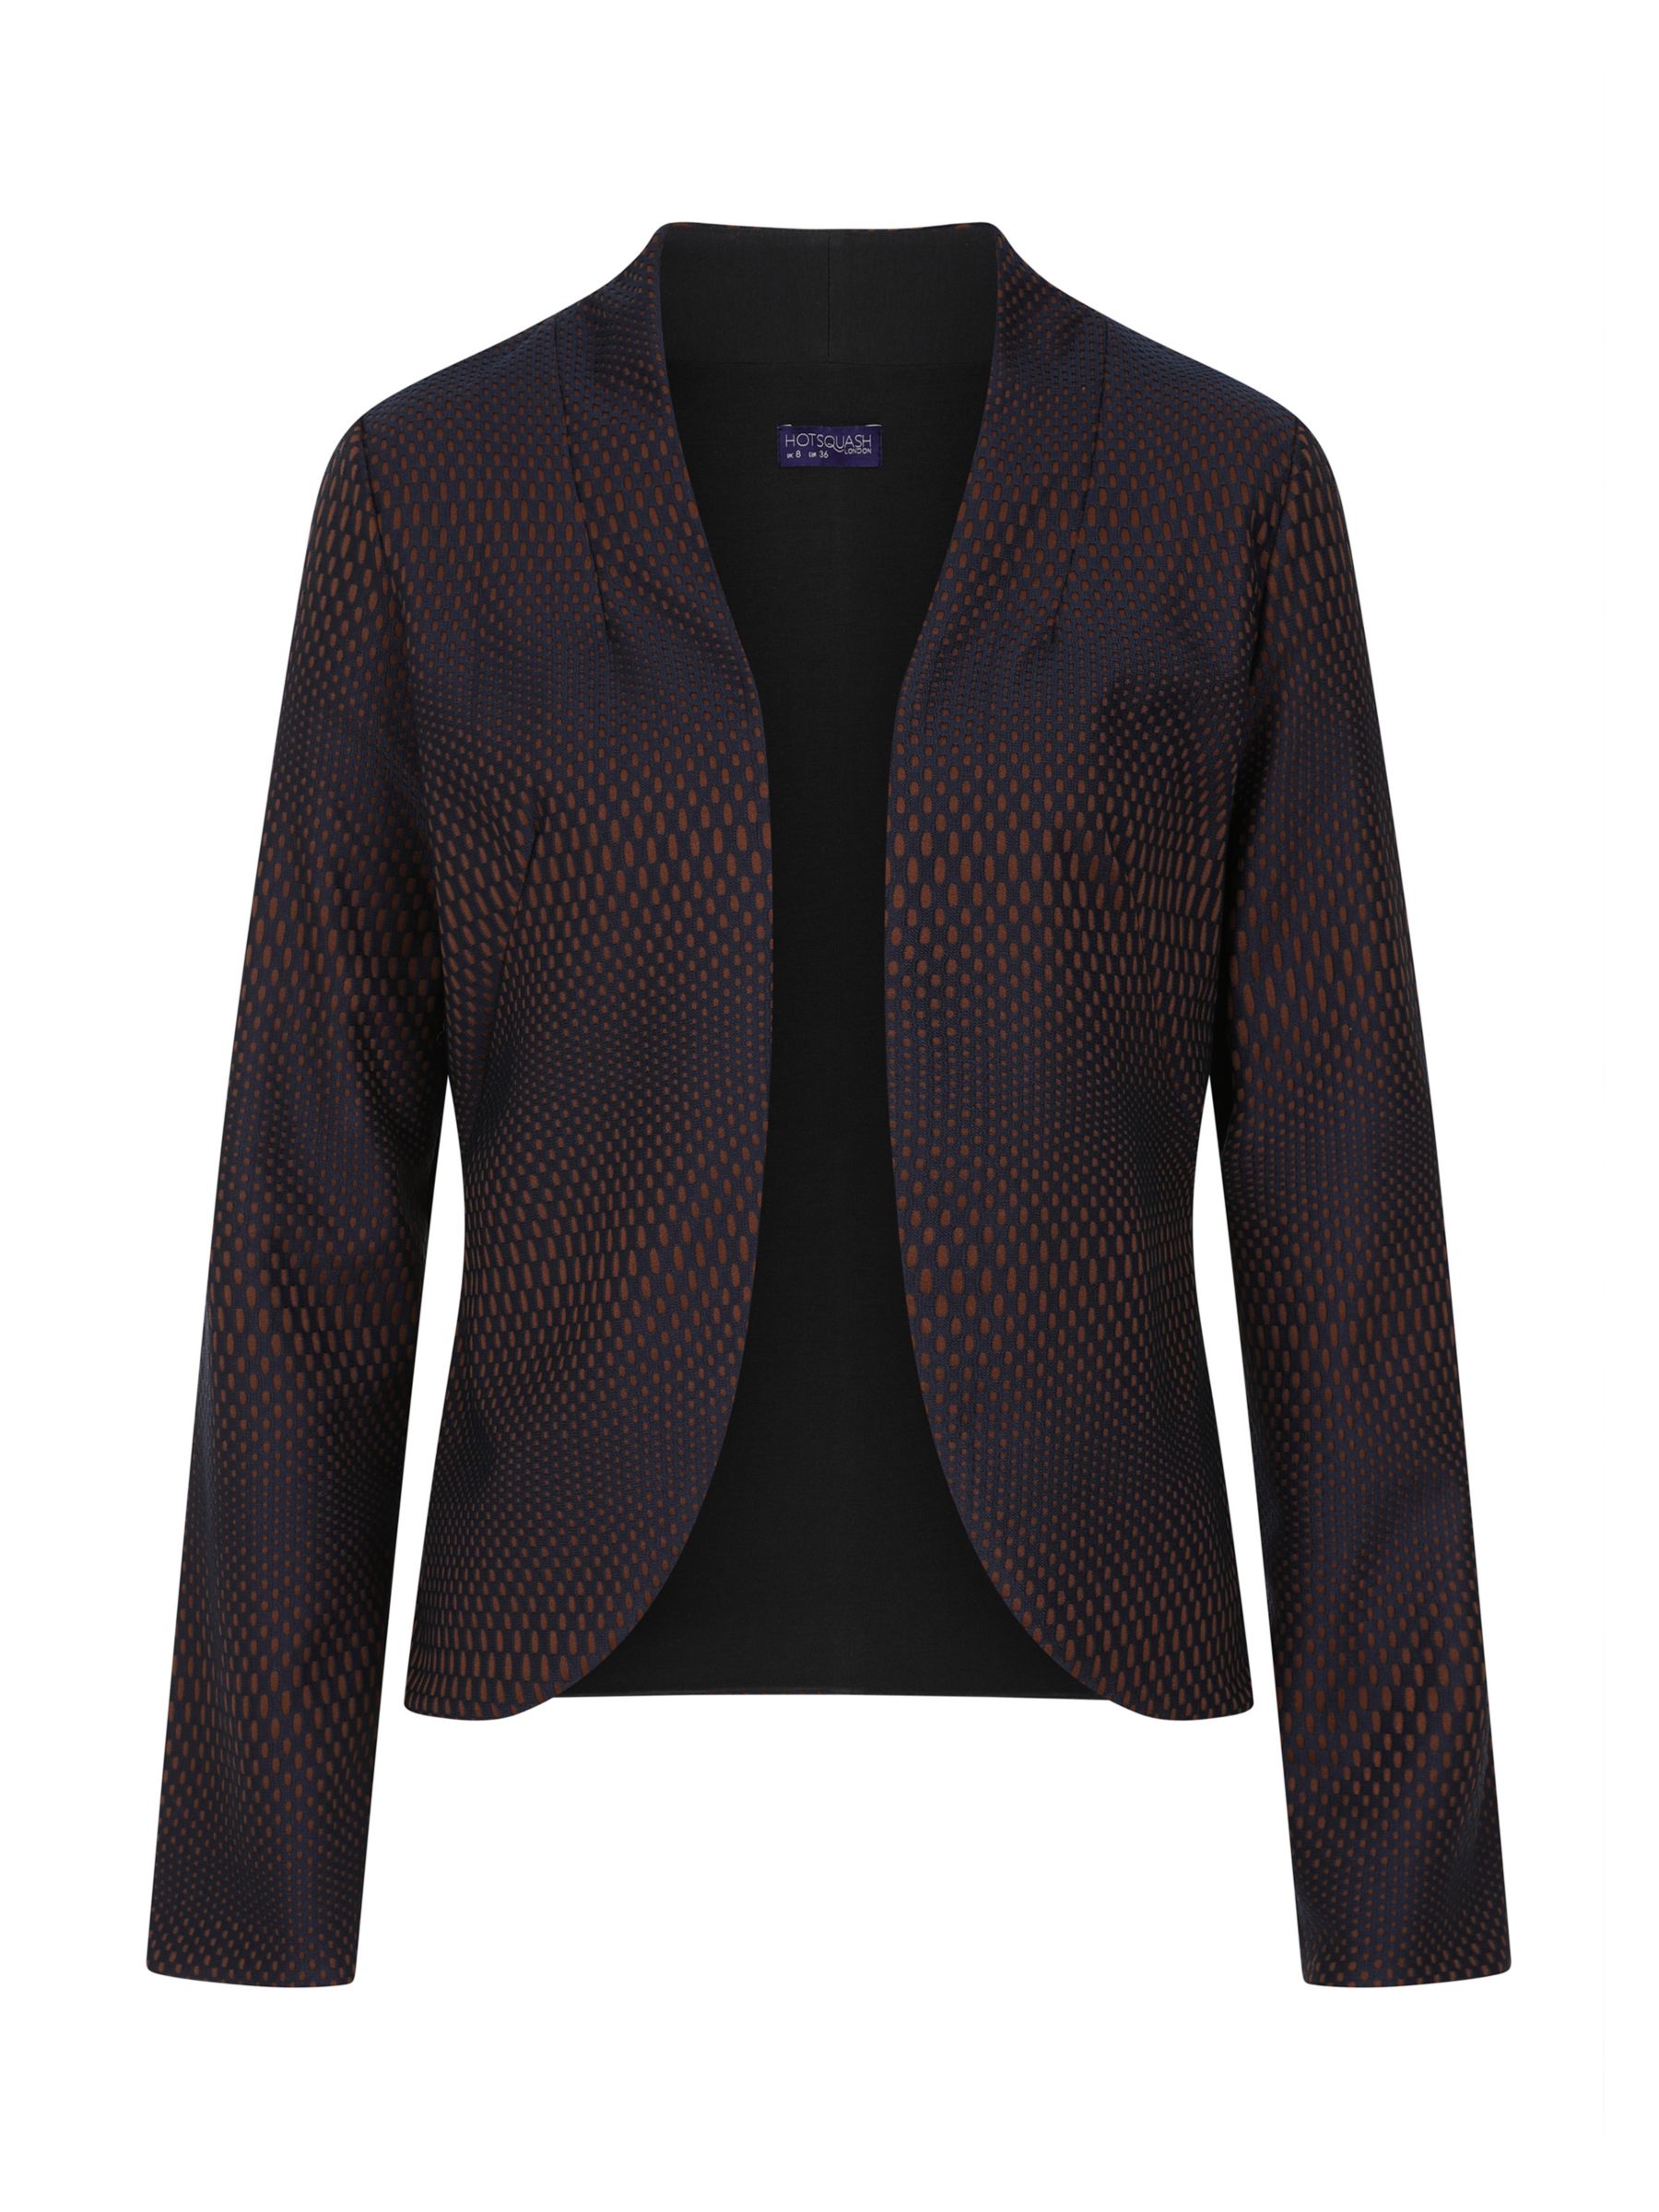 Buy HotSquash Textured Tailored Office Blazer, Brown/Navy Online at johnlewis.com